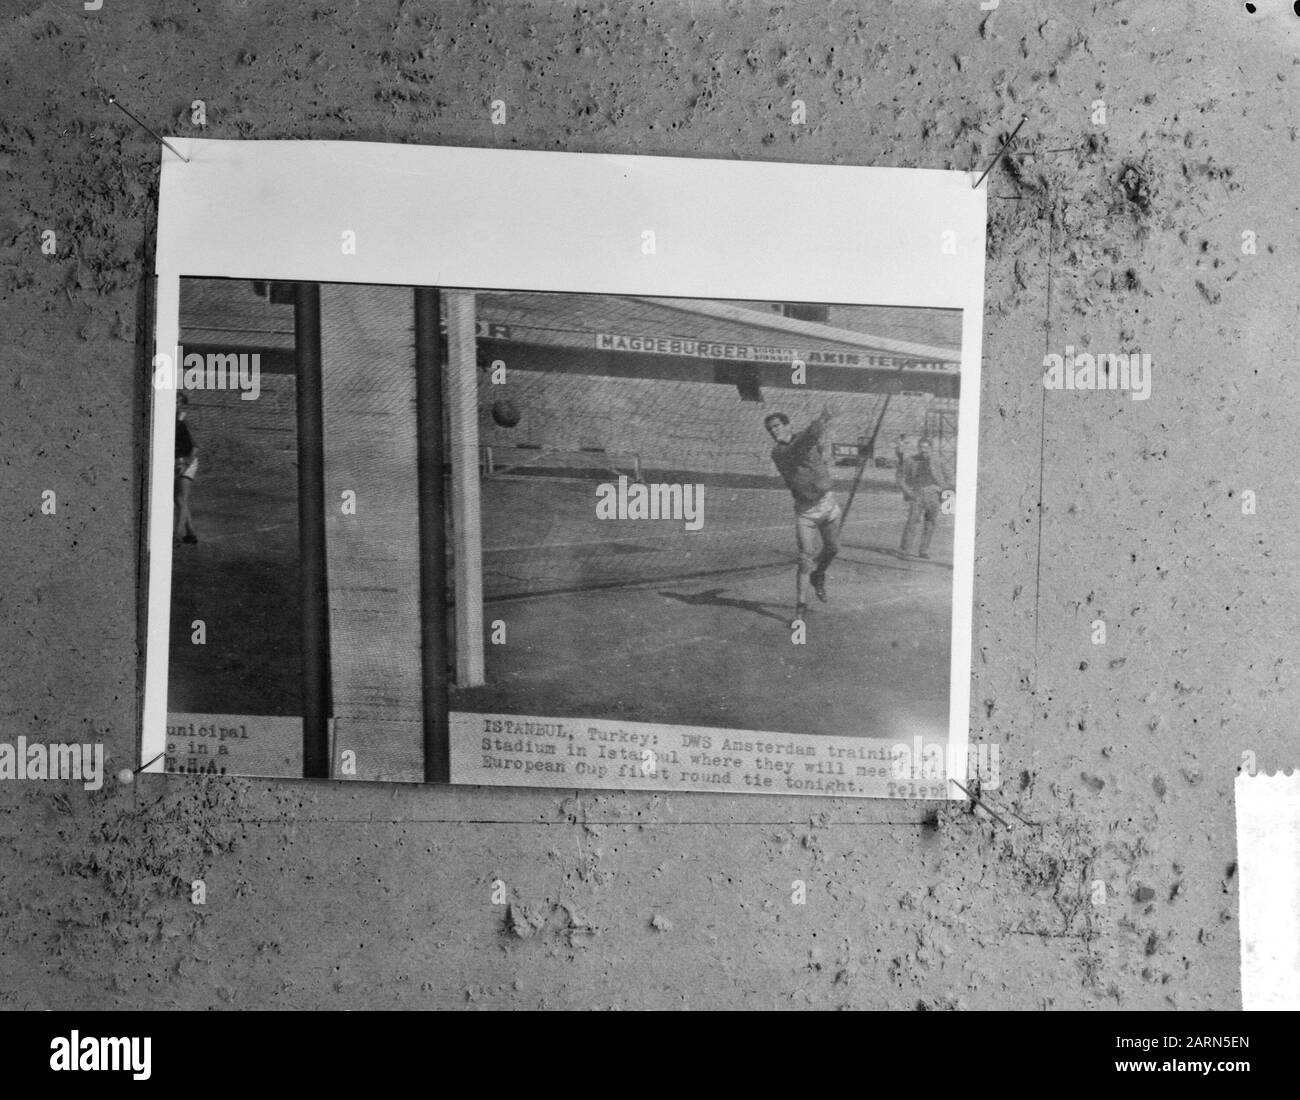 DWS-team trains, goalkeeper Jongbloed is taken care of Date: October 7, 1964 Keywords: goalkeepers, sports, trainings, football Stock Photo